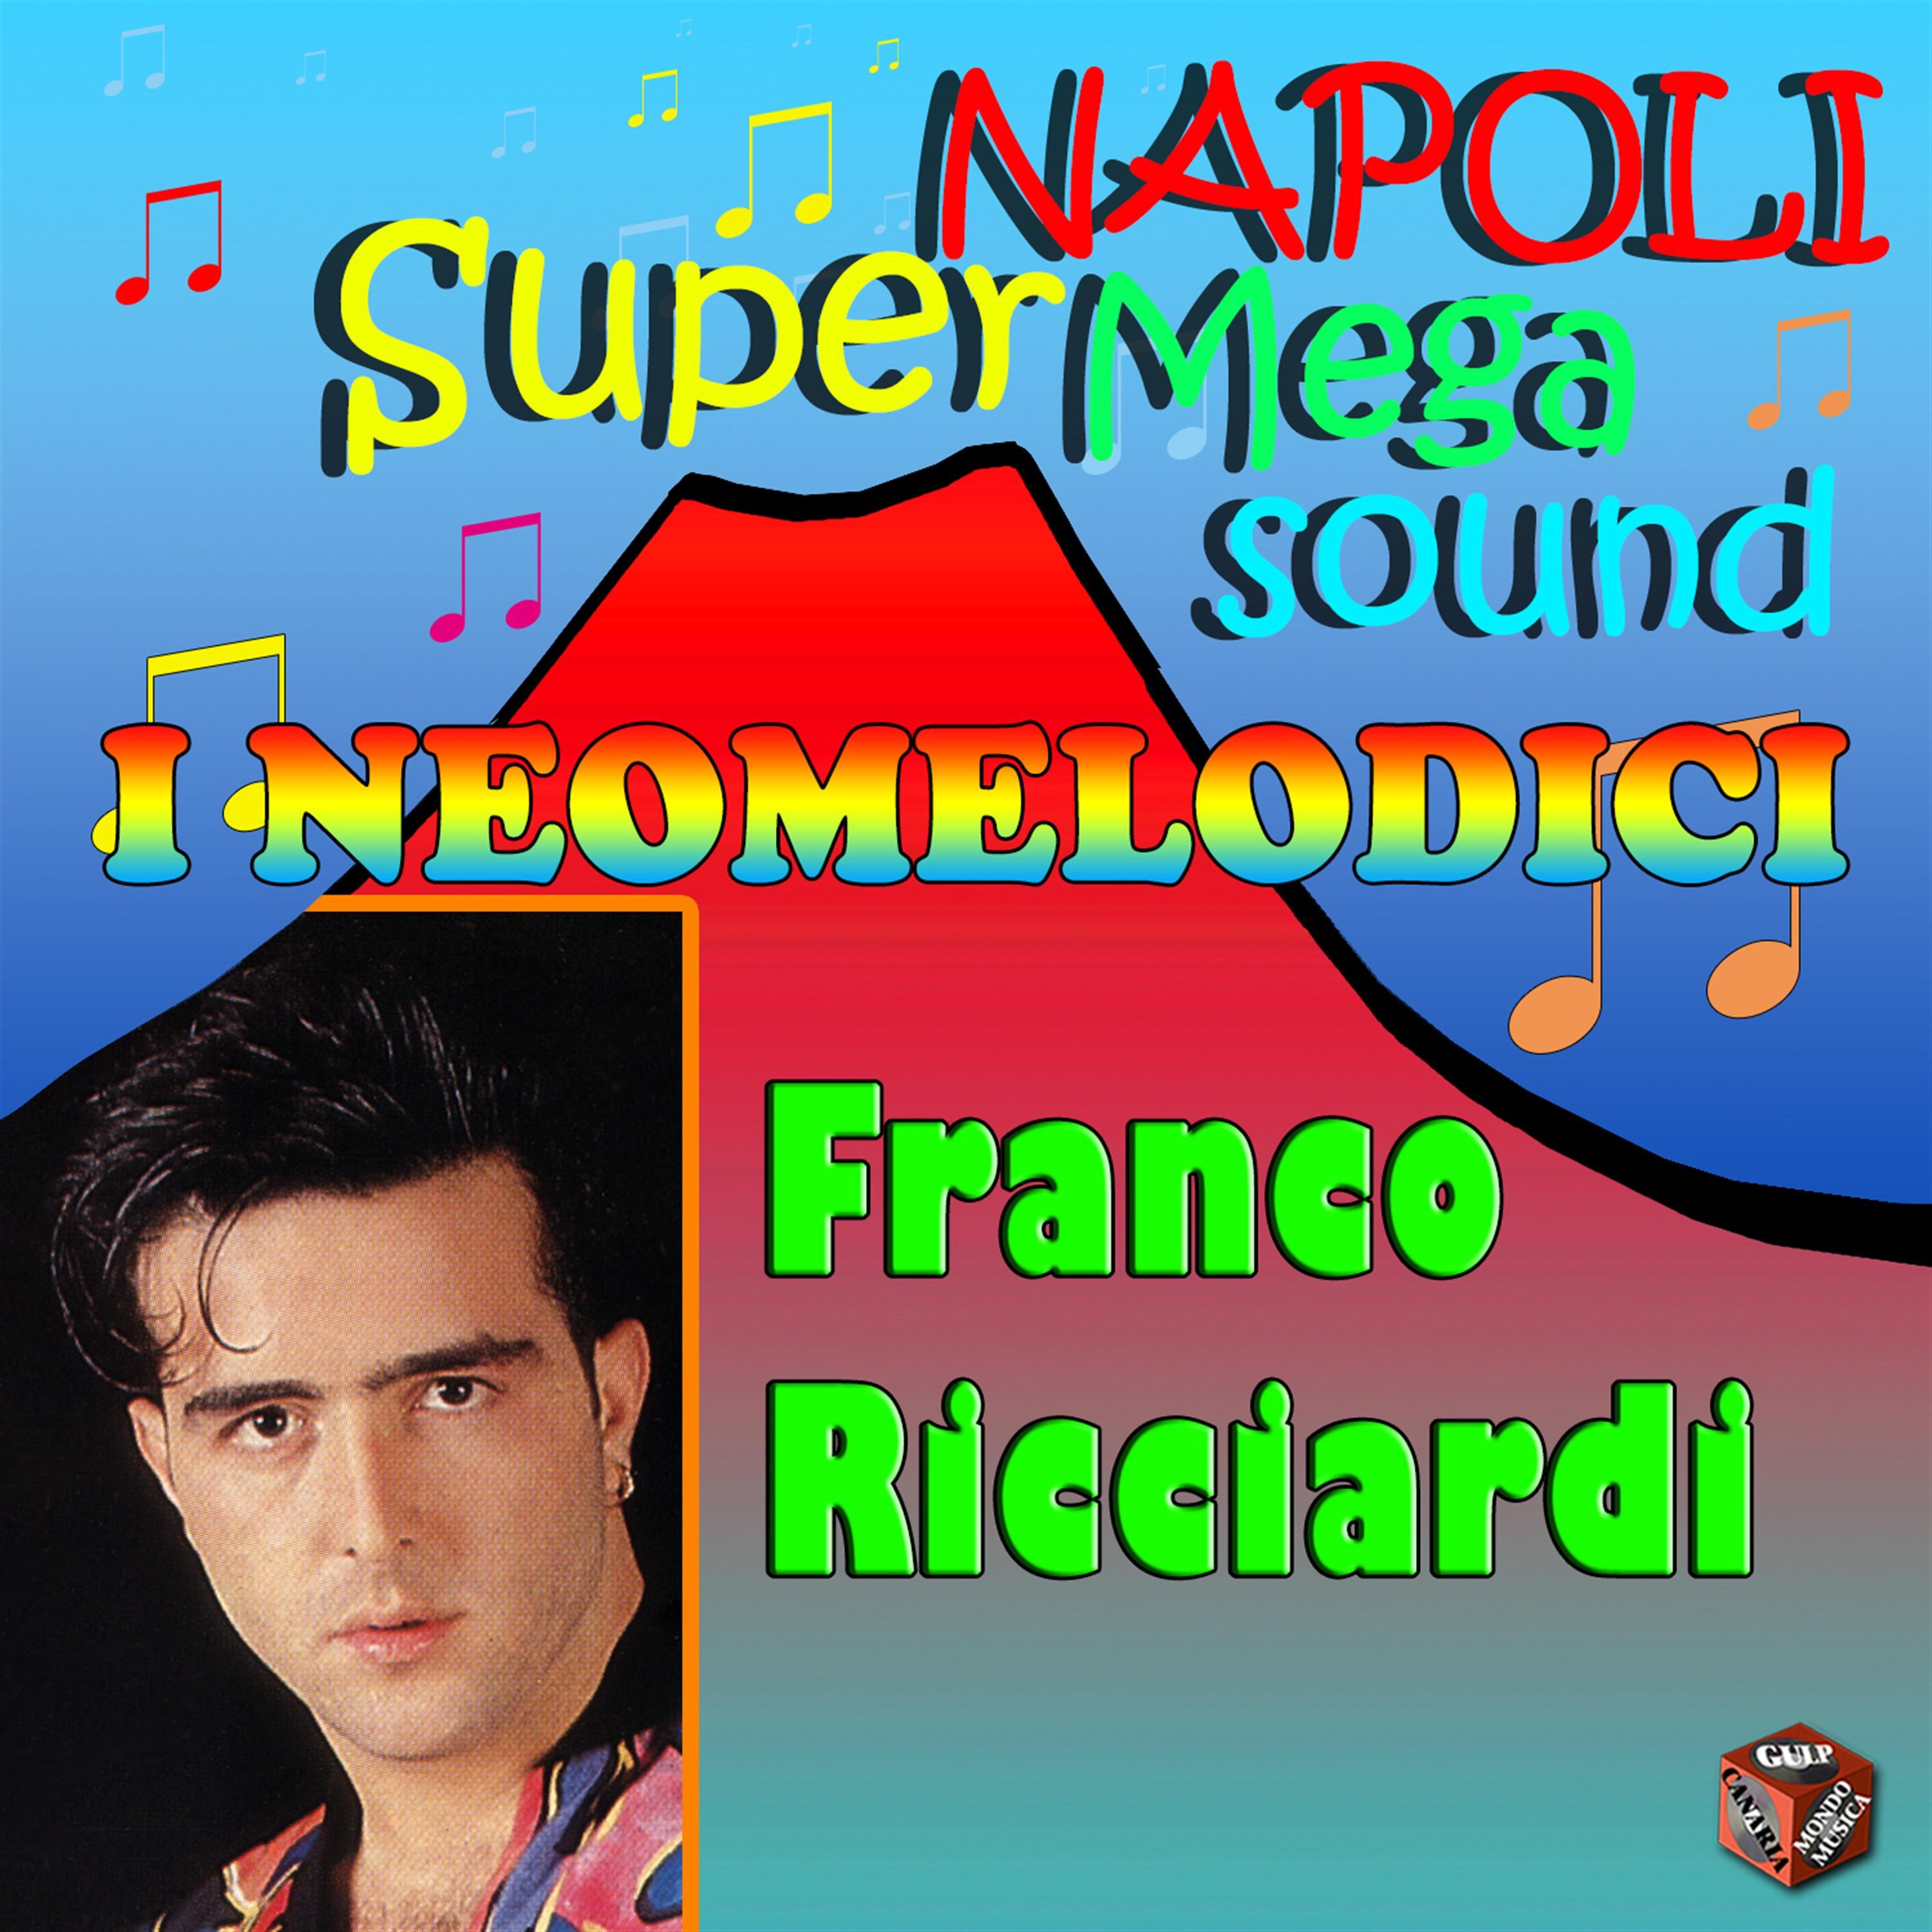 Napoli super mega sound - I neomelodici - Franco Ricciardi